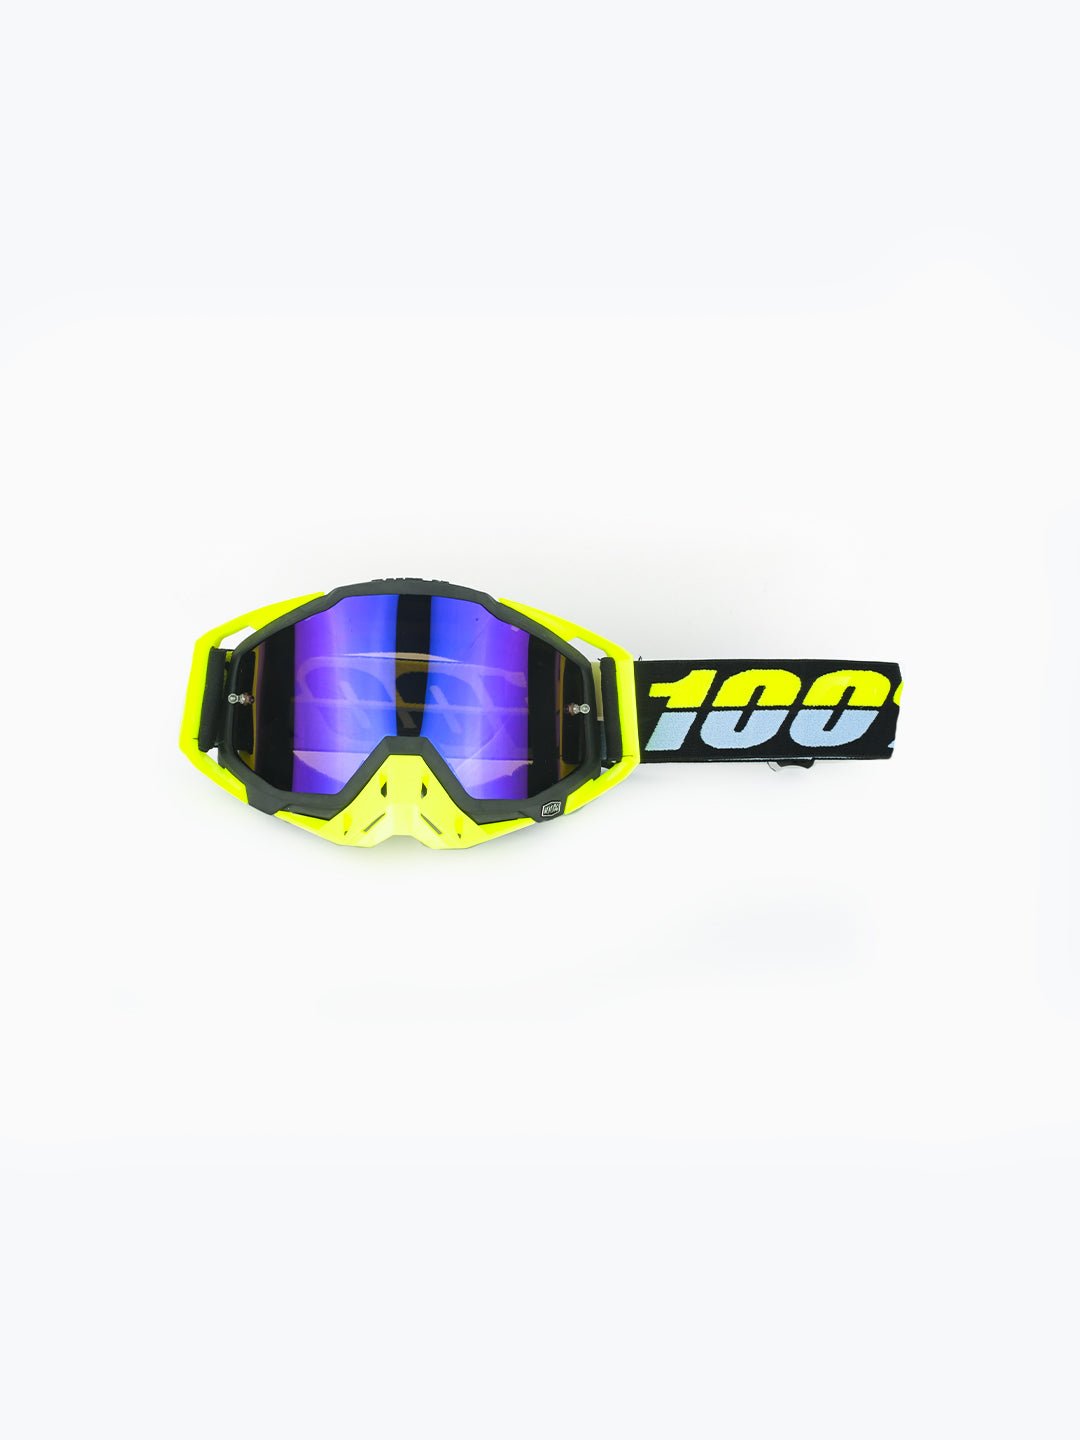 100% Goggles Yellow Black Blue Tint